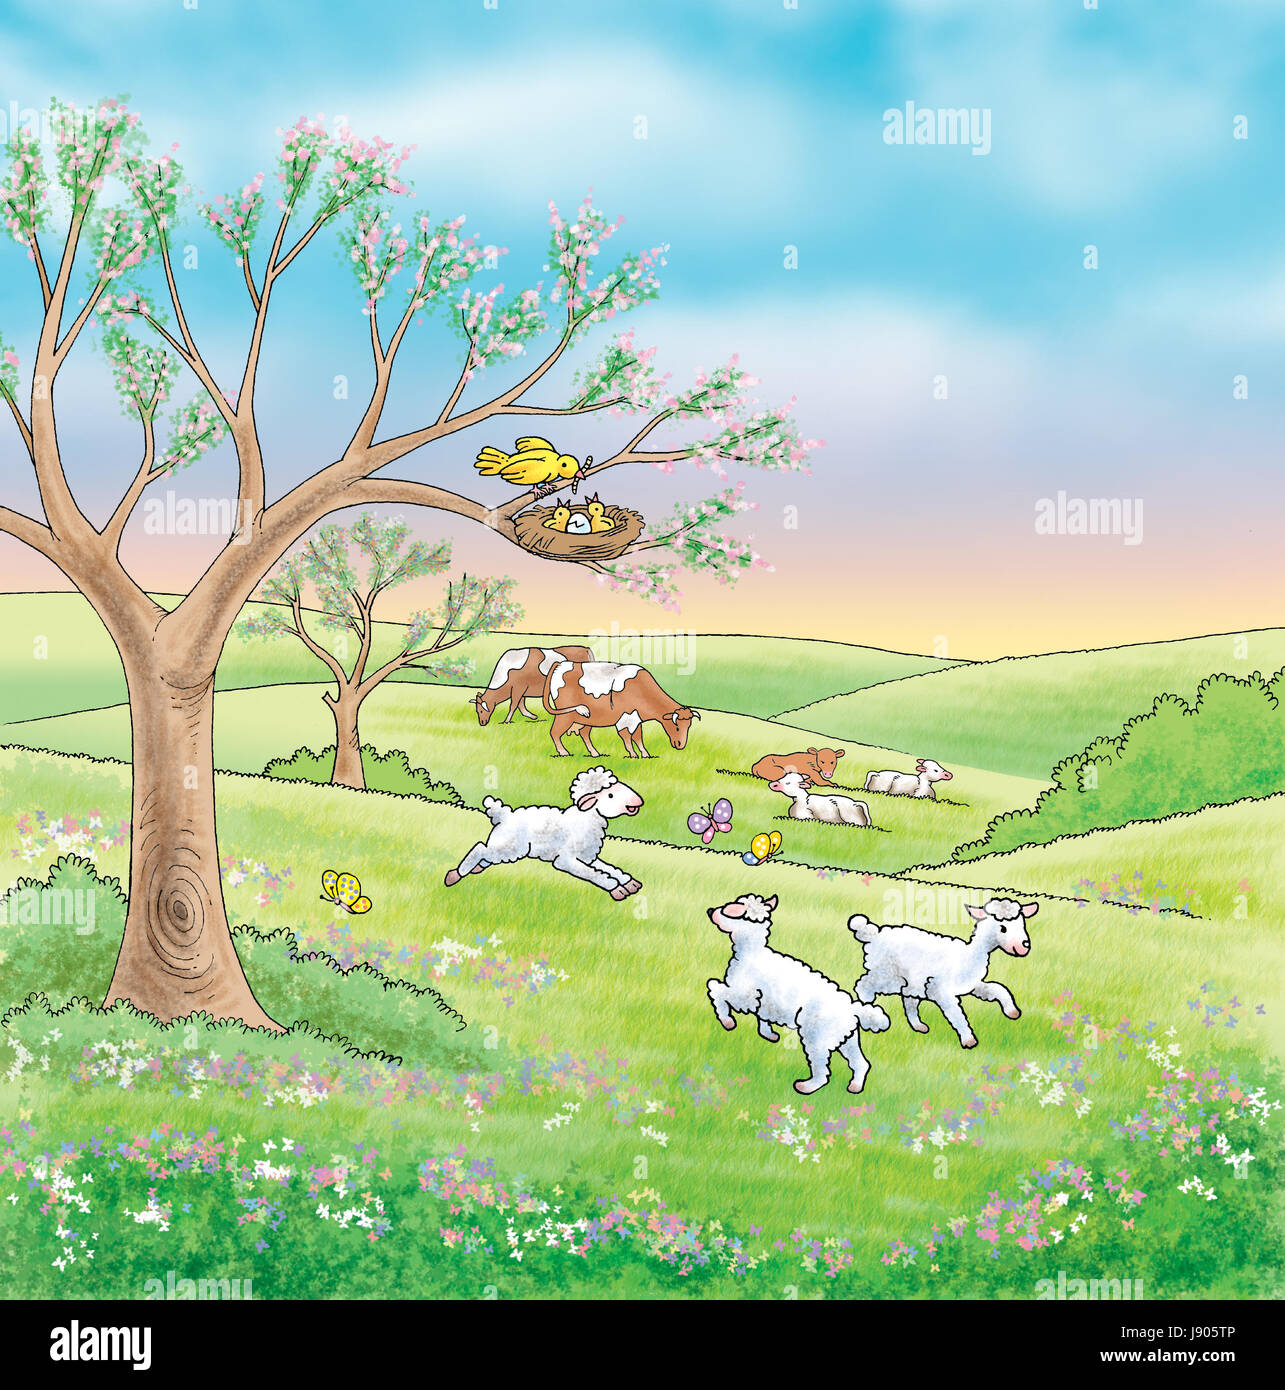 Some farm animals and nature - illustration Stock Photo